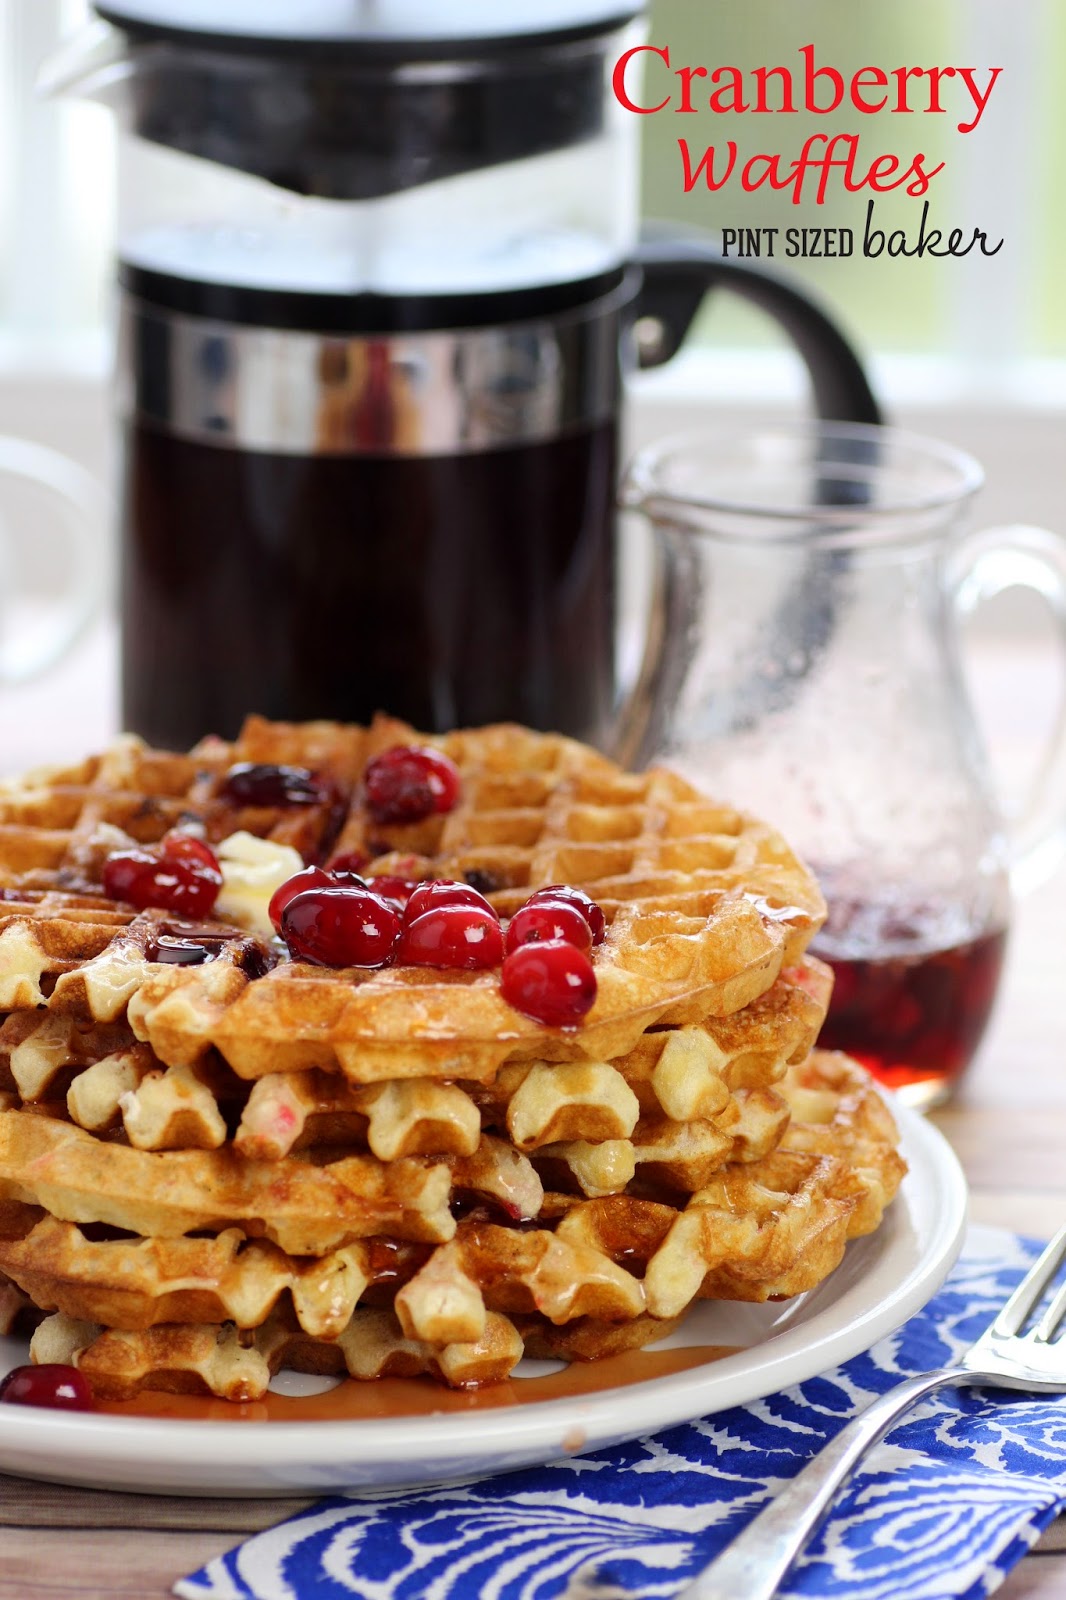 Sweet and Tart Cranberry Waffles are a seasonal favorite. Make up a big batch!